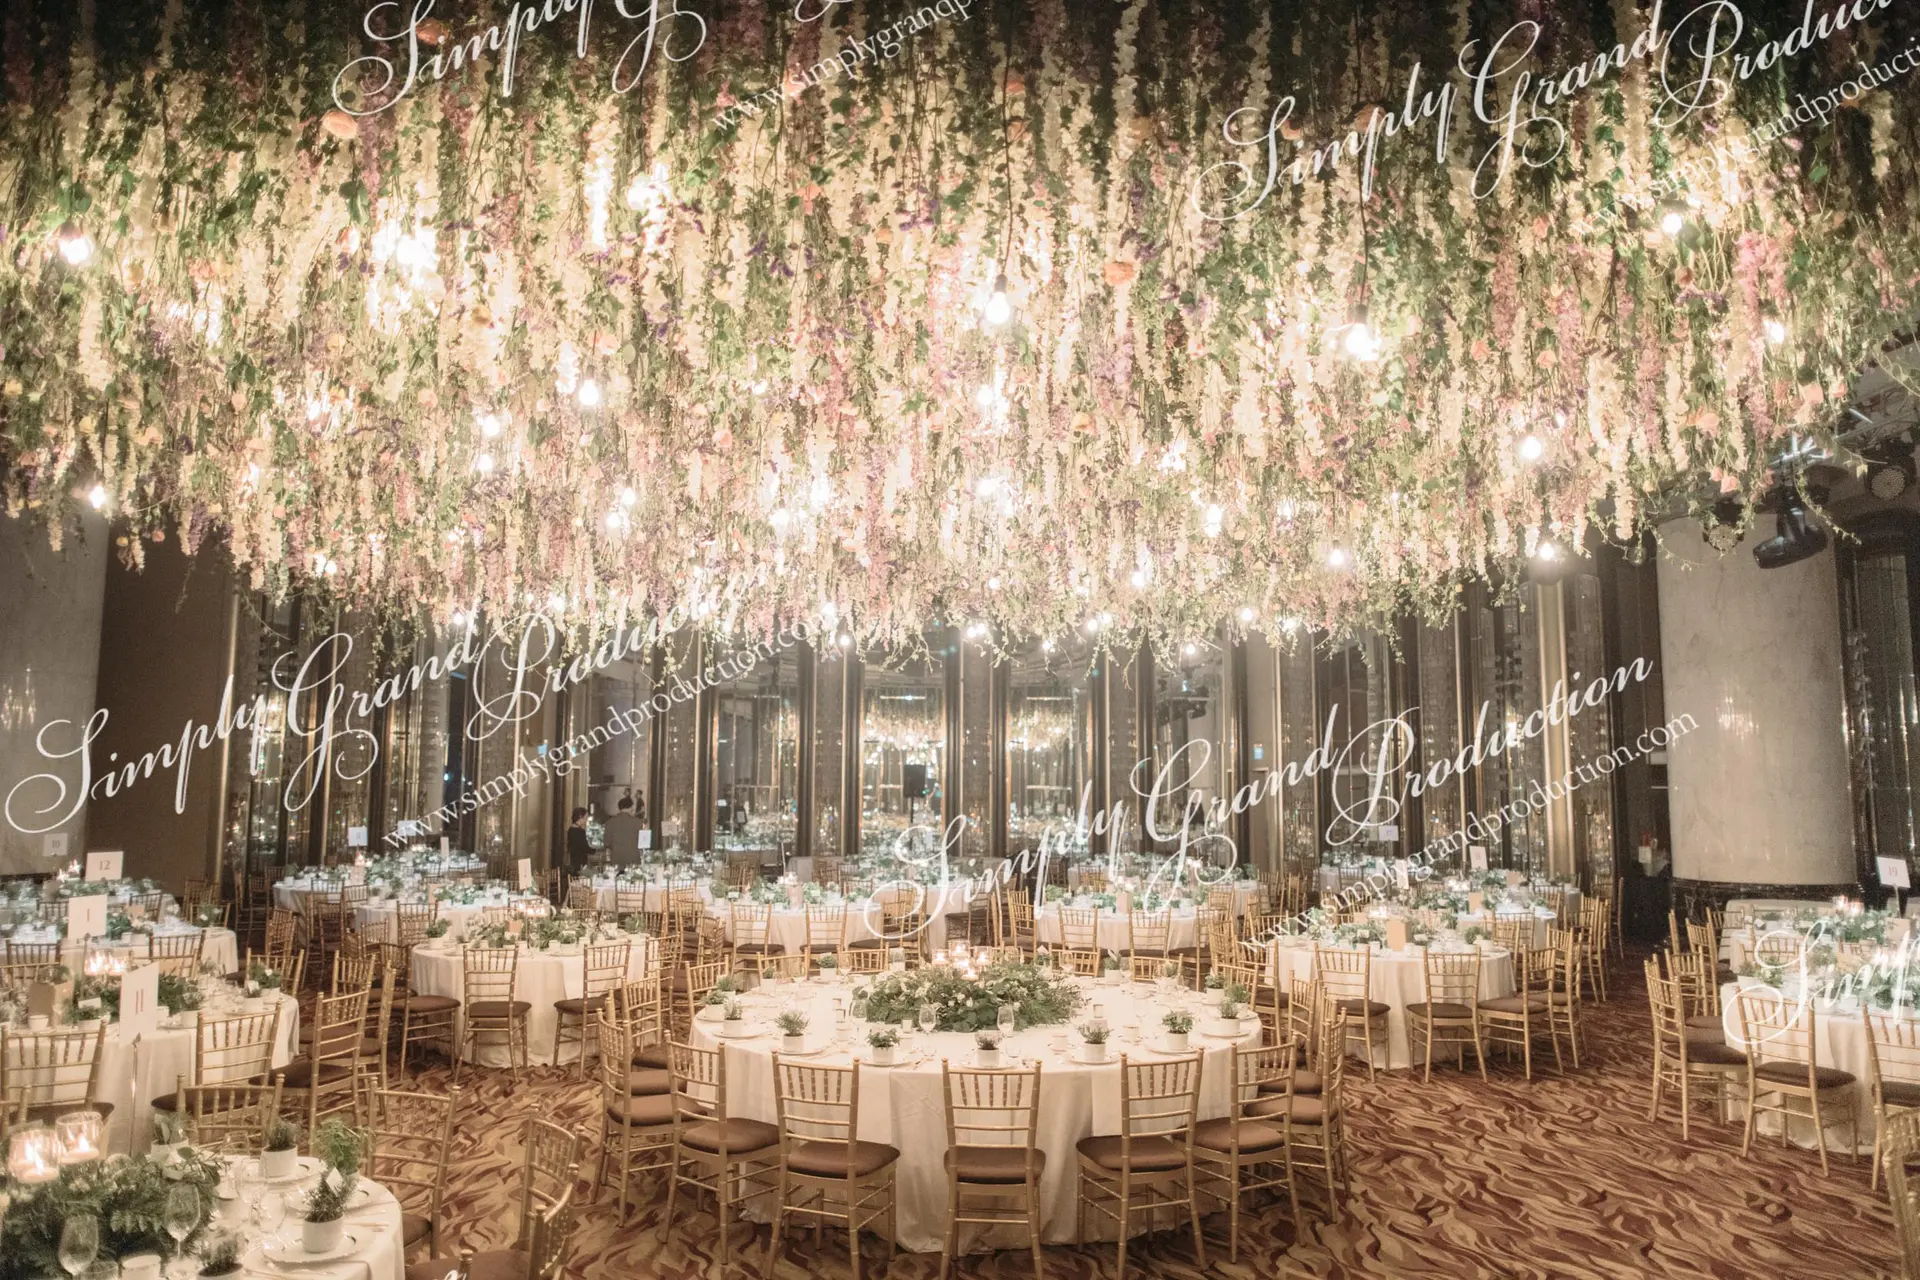 Simply_Grand_Production_Ballroom_wedding_decoration_hanging_installation_floral_celling_light_bulbs_weddinginspo_Grand_Hyatt_2_13_wm